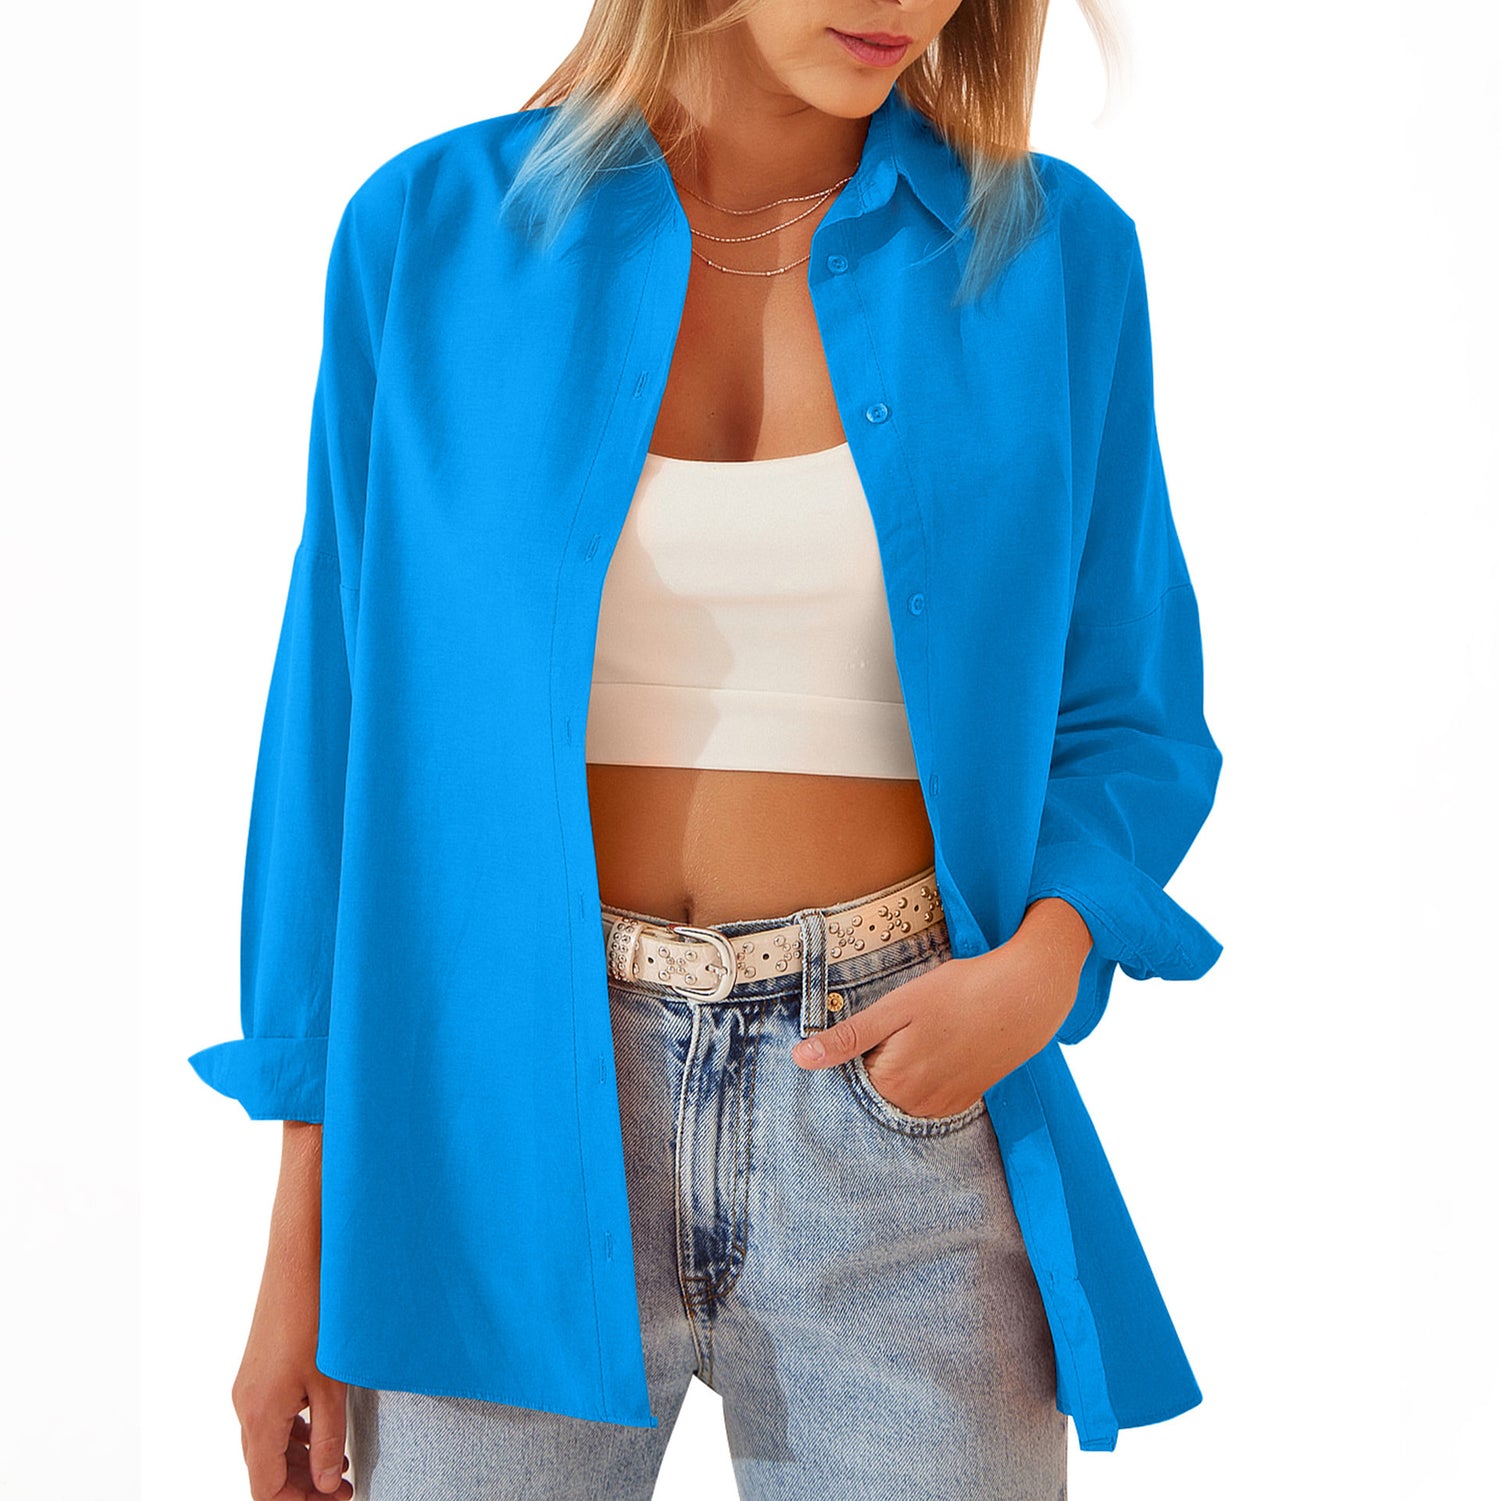 Shirt  | Women's Shirt Jacket Long Sleeve Blouse Button Down Tops Candy Color Shirt | Color Blue |  2XL| thecurvestory.myshopify.com